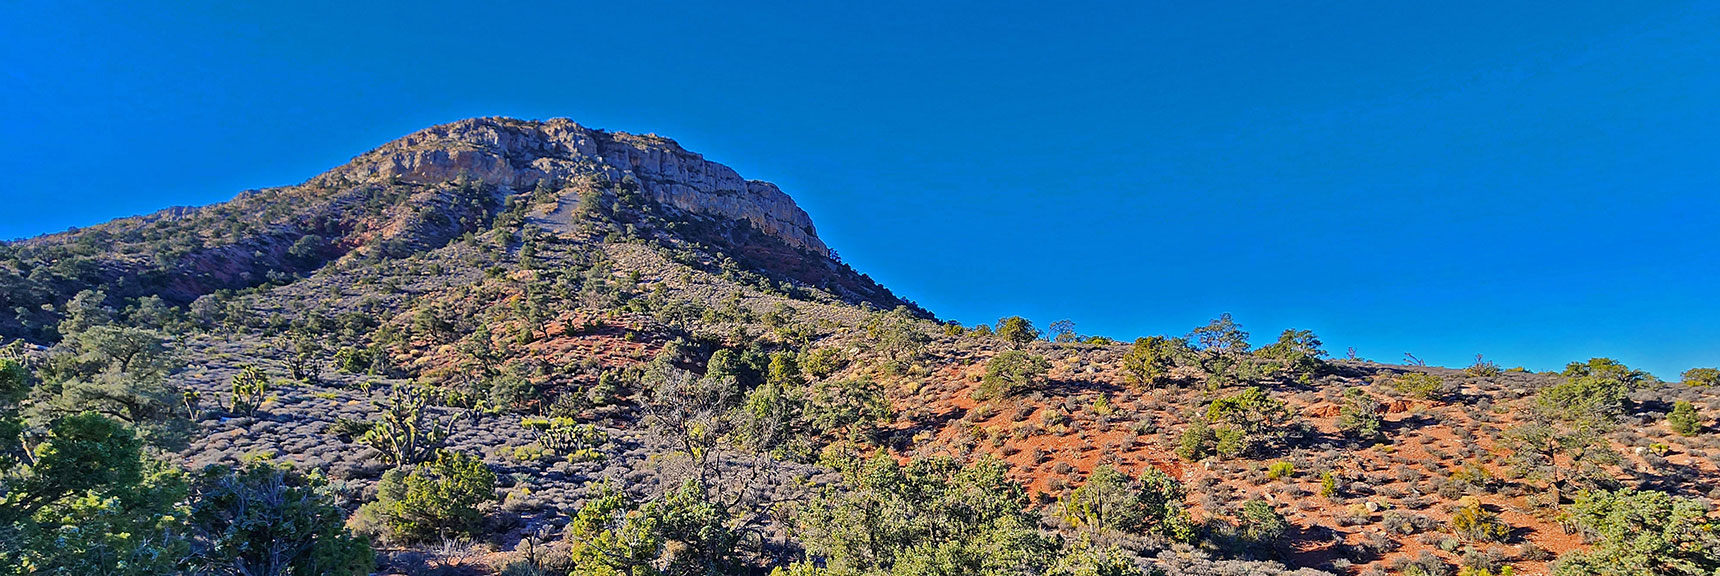 Traverse the Series of Ridges Extending from the Cliffs Above. | Landmark Bluff Circuit | Lovell Canyon, Nevada